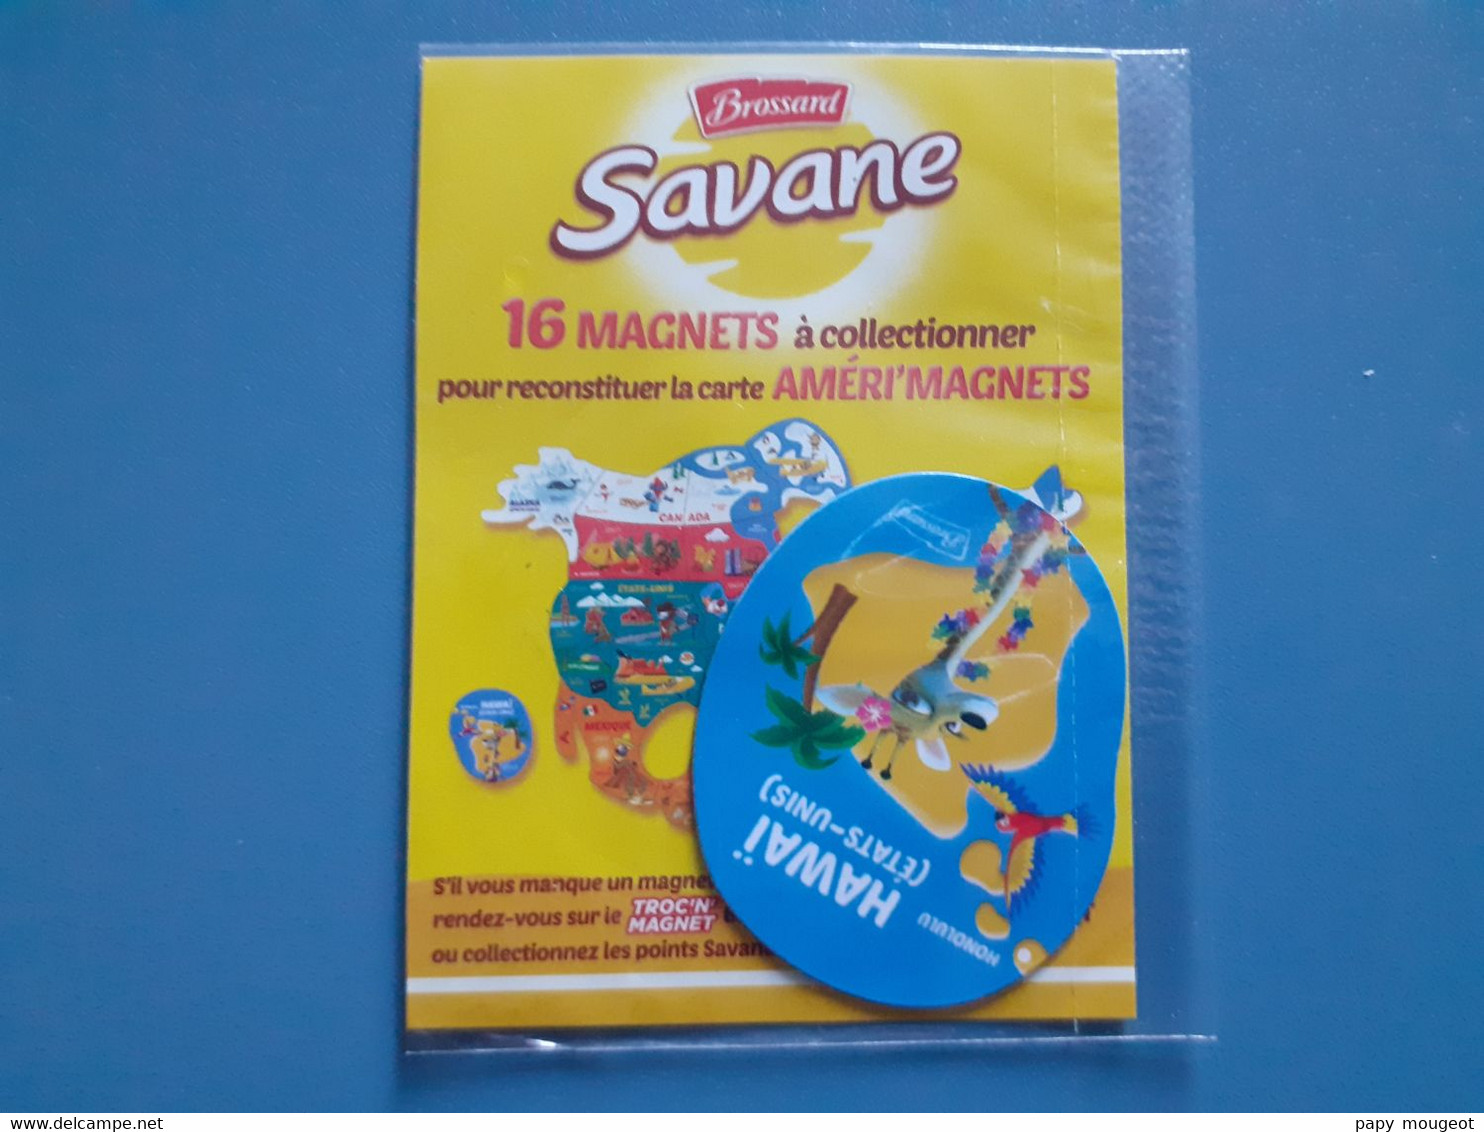 Brossard Savane - 16 Magnets Carte AMERI'MAGNETS - Hawaï (1) - Advertising